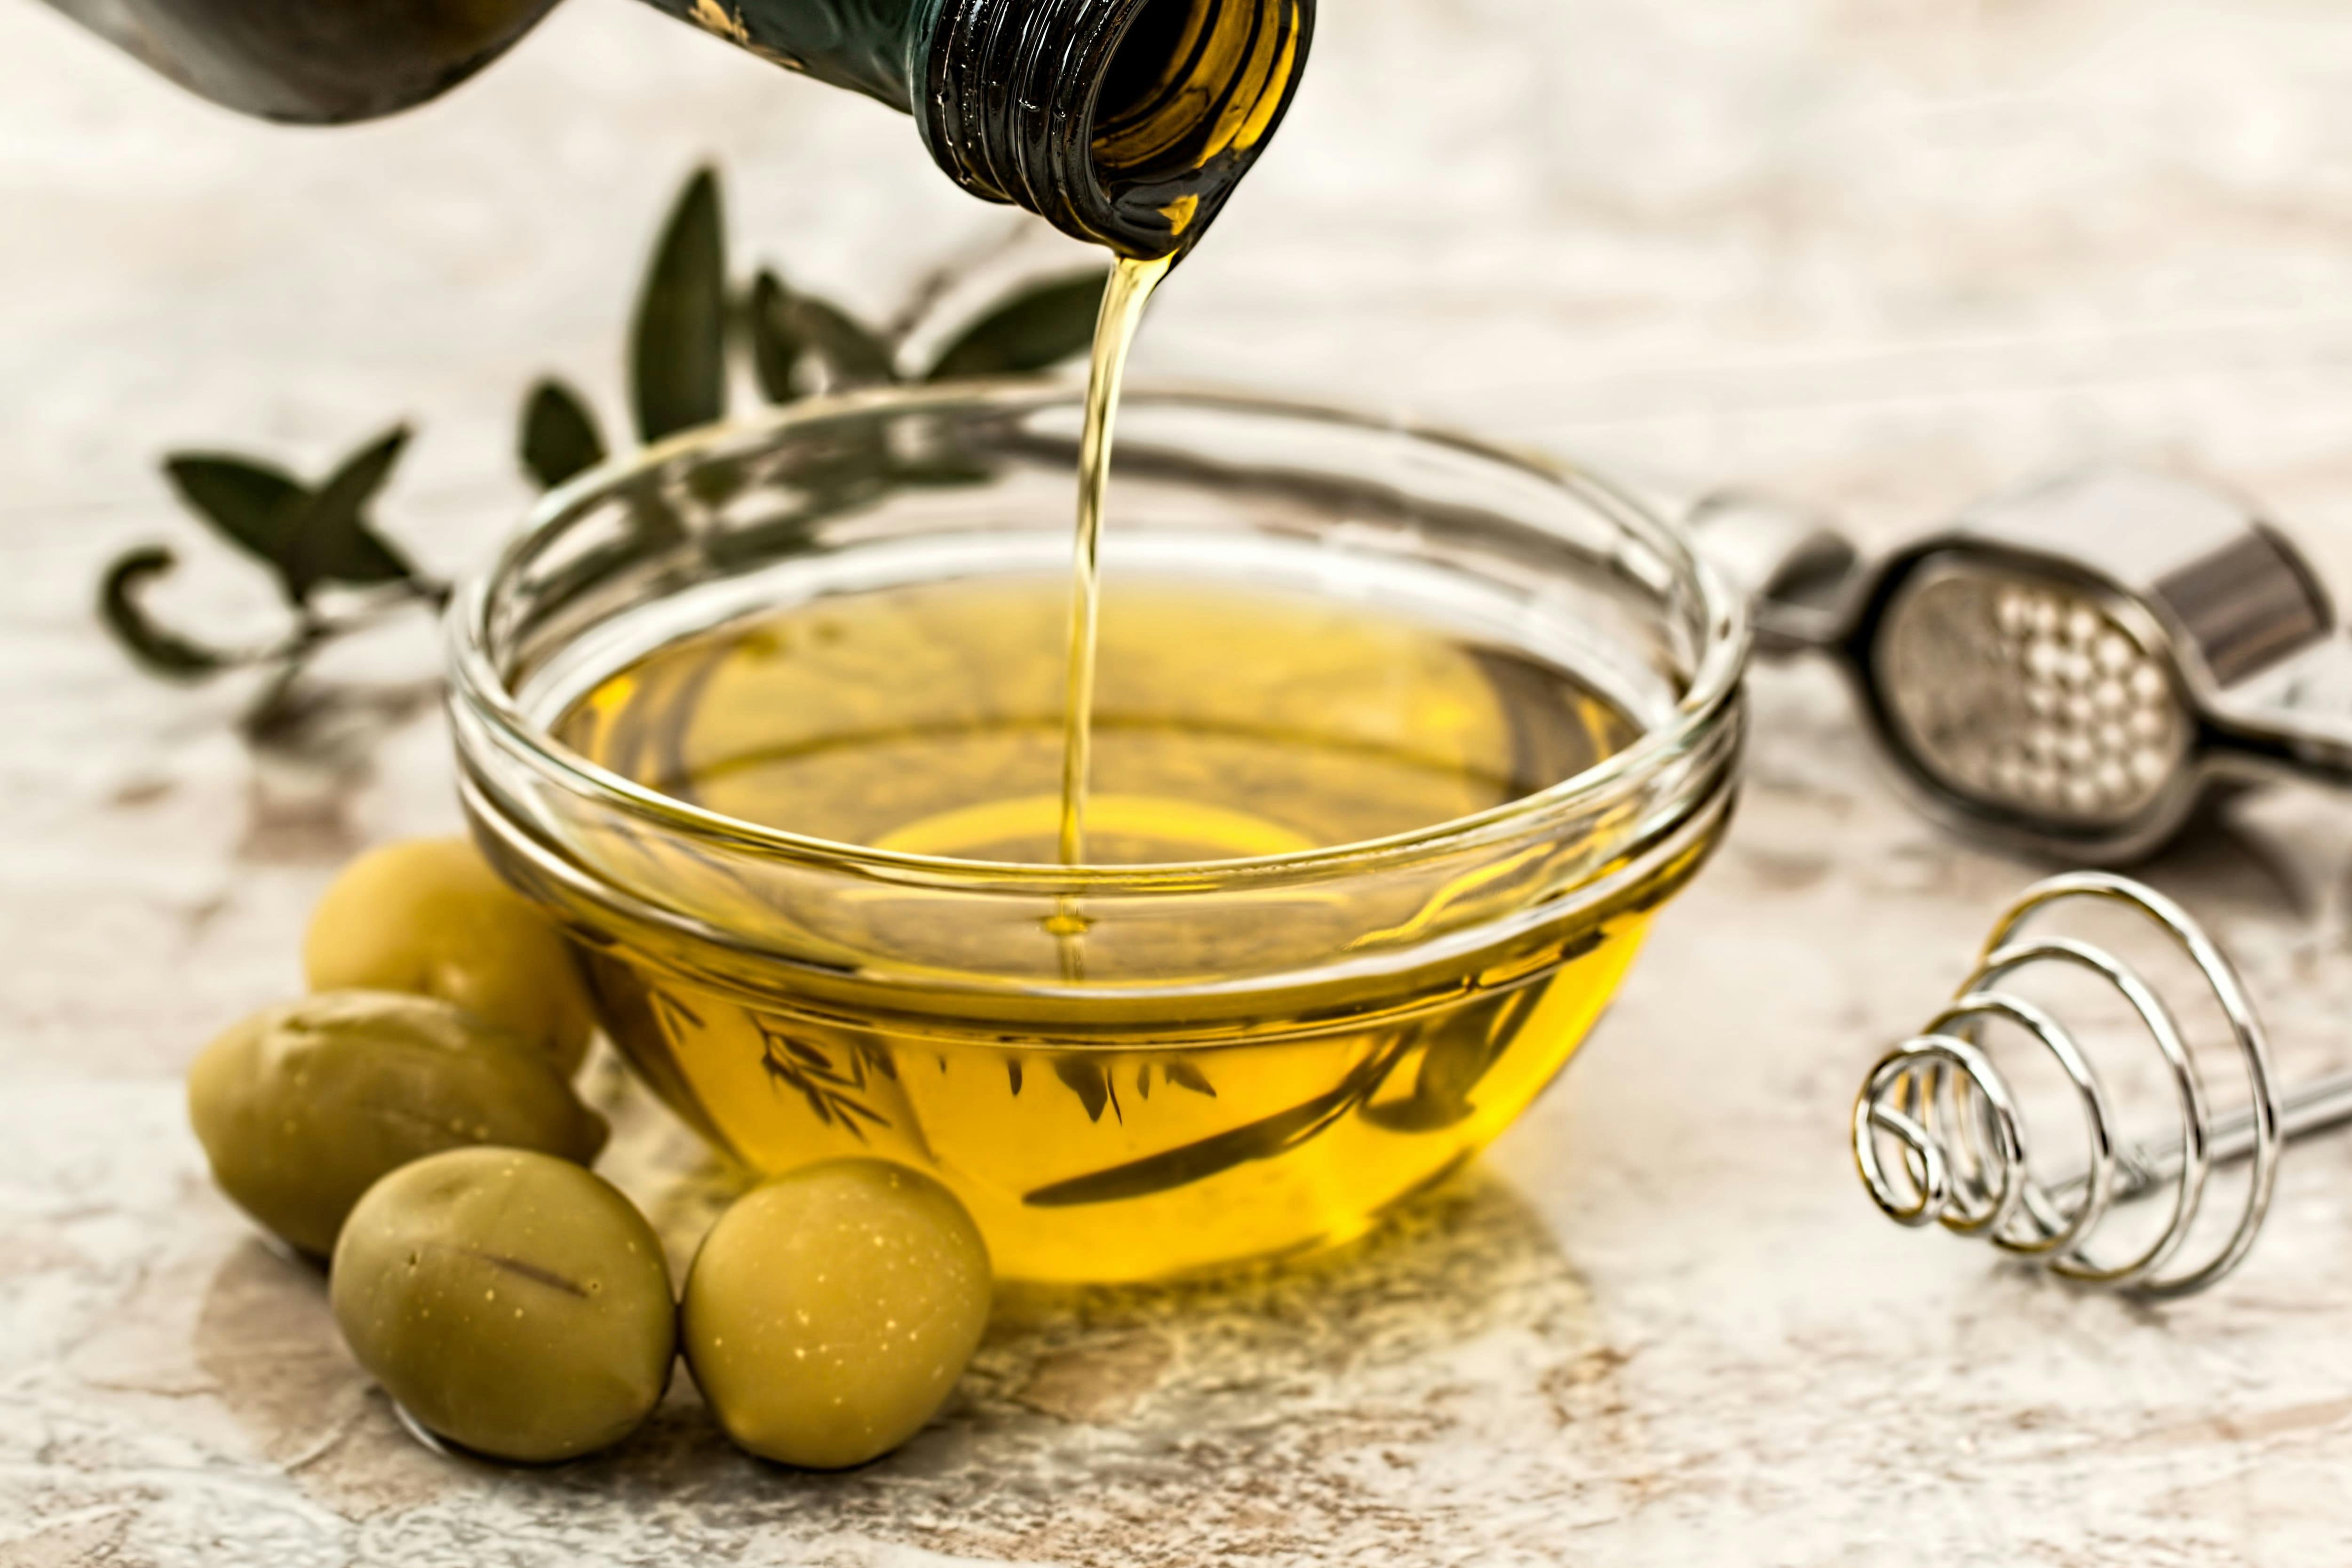 Alberobello, Ostuni & Olive Oil from Salento Ionian Coast